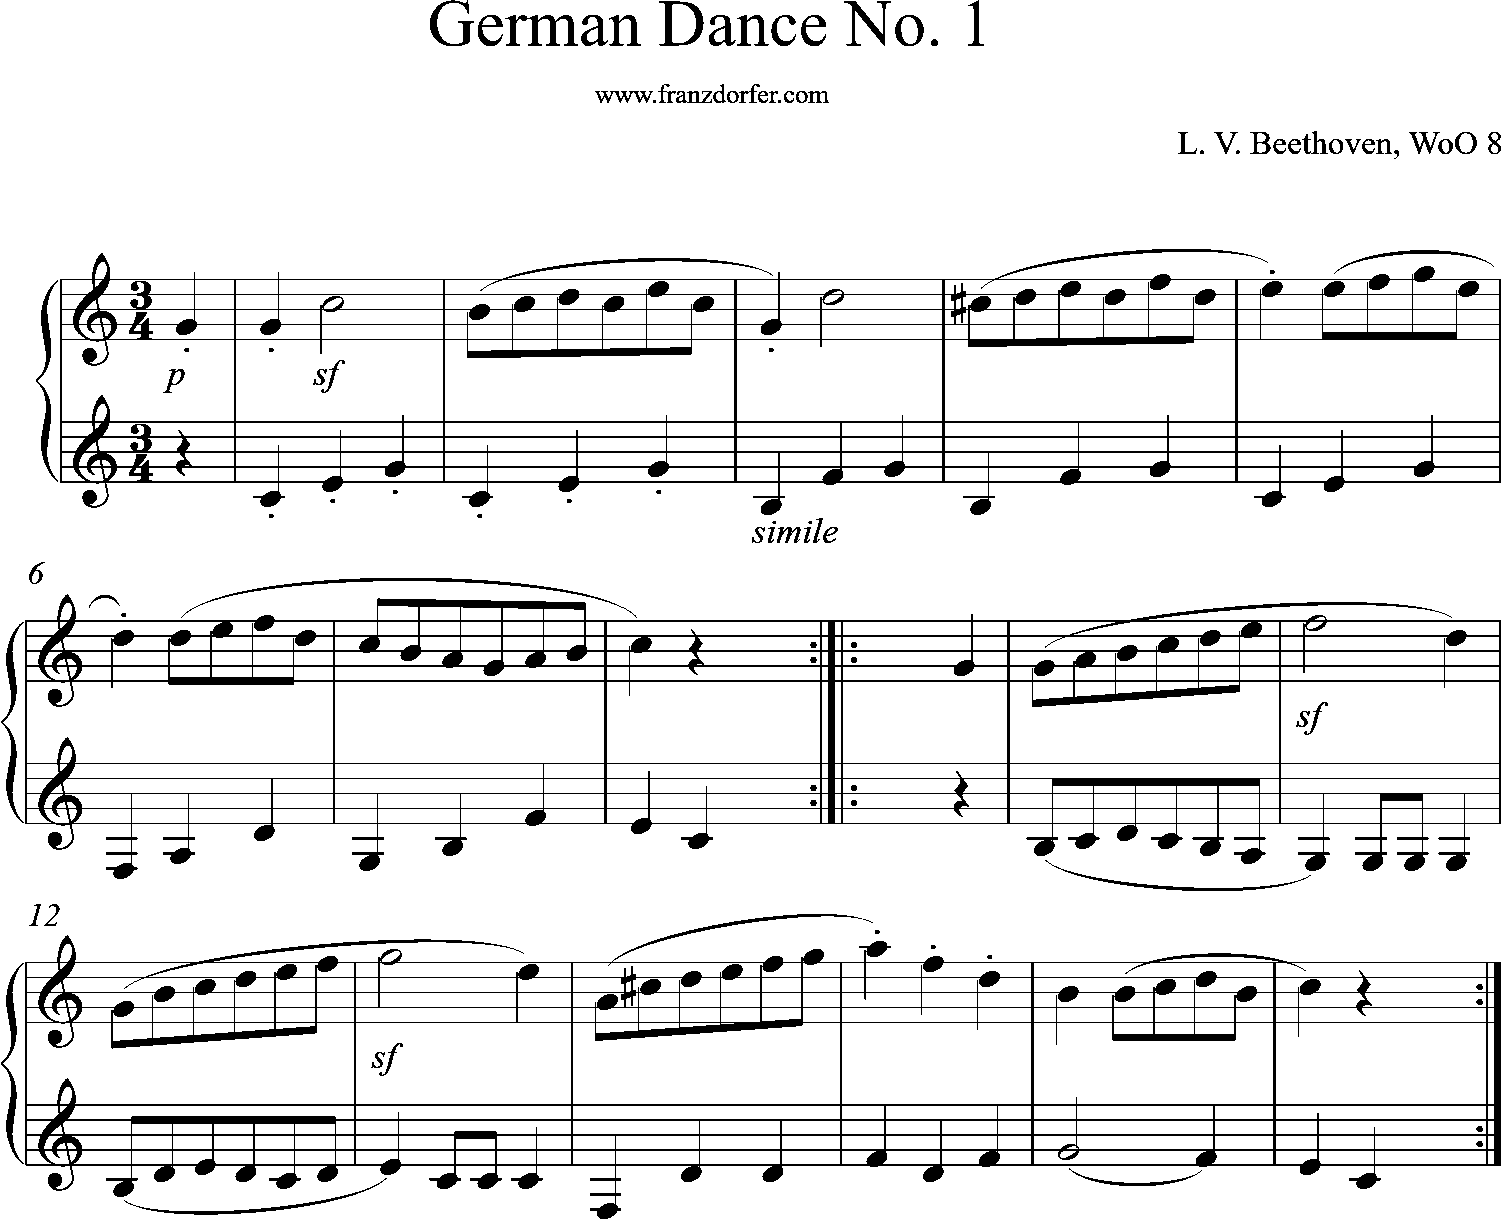 clarinet sheetmusic, German Dance,1 WoO 8, Beethoven